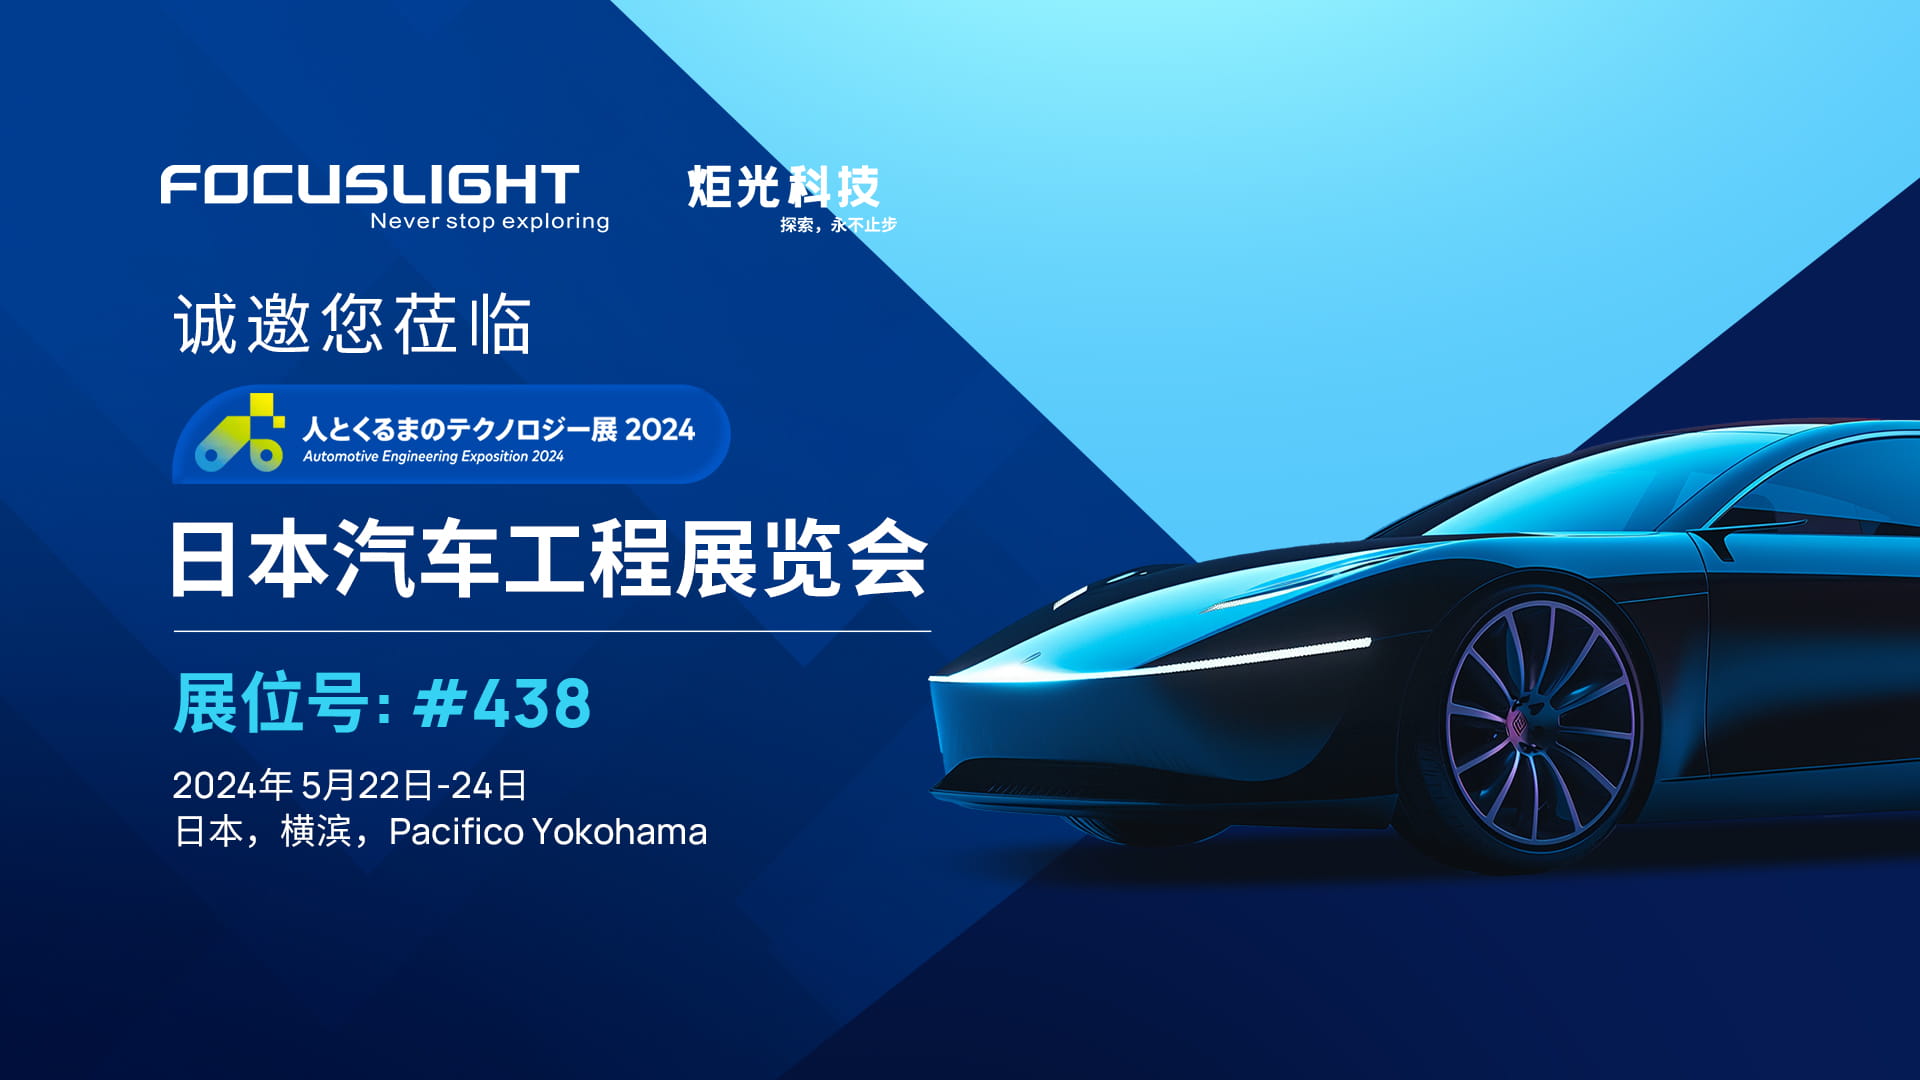 Focuslight Will Be Exhibiting at Automotive Engineering Exposition(AEE) 